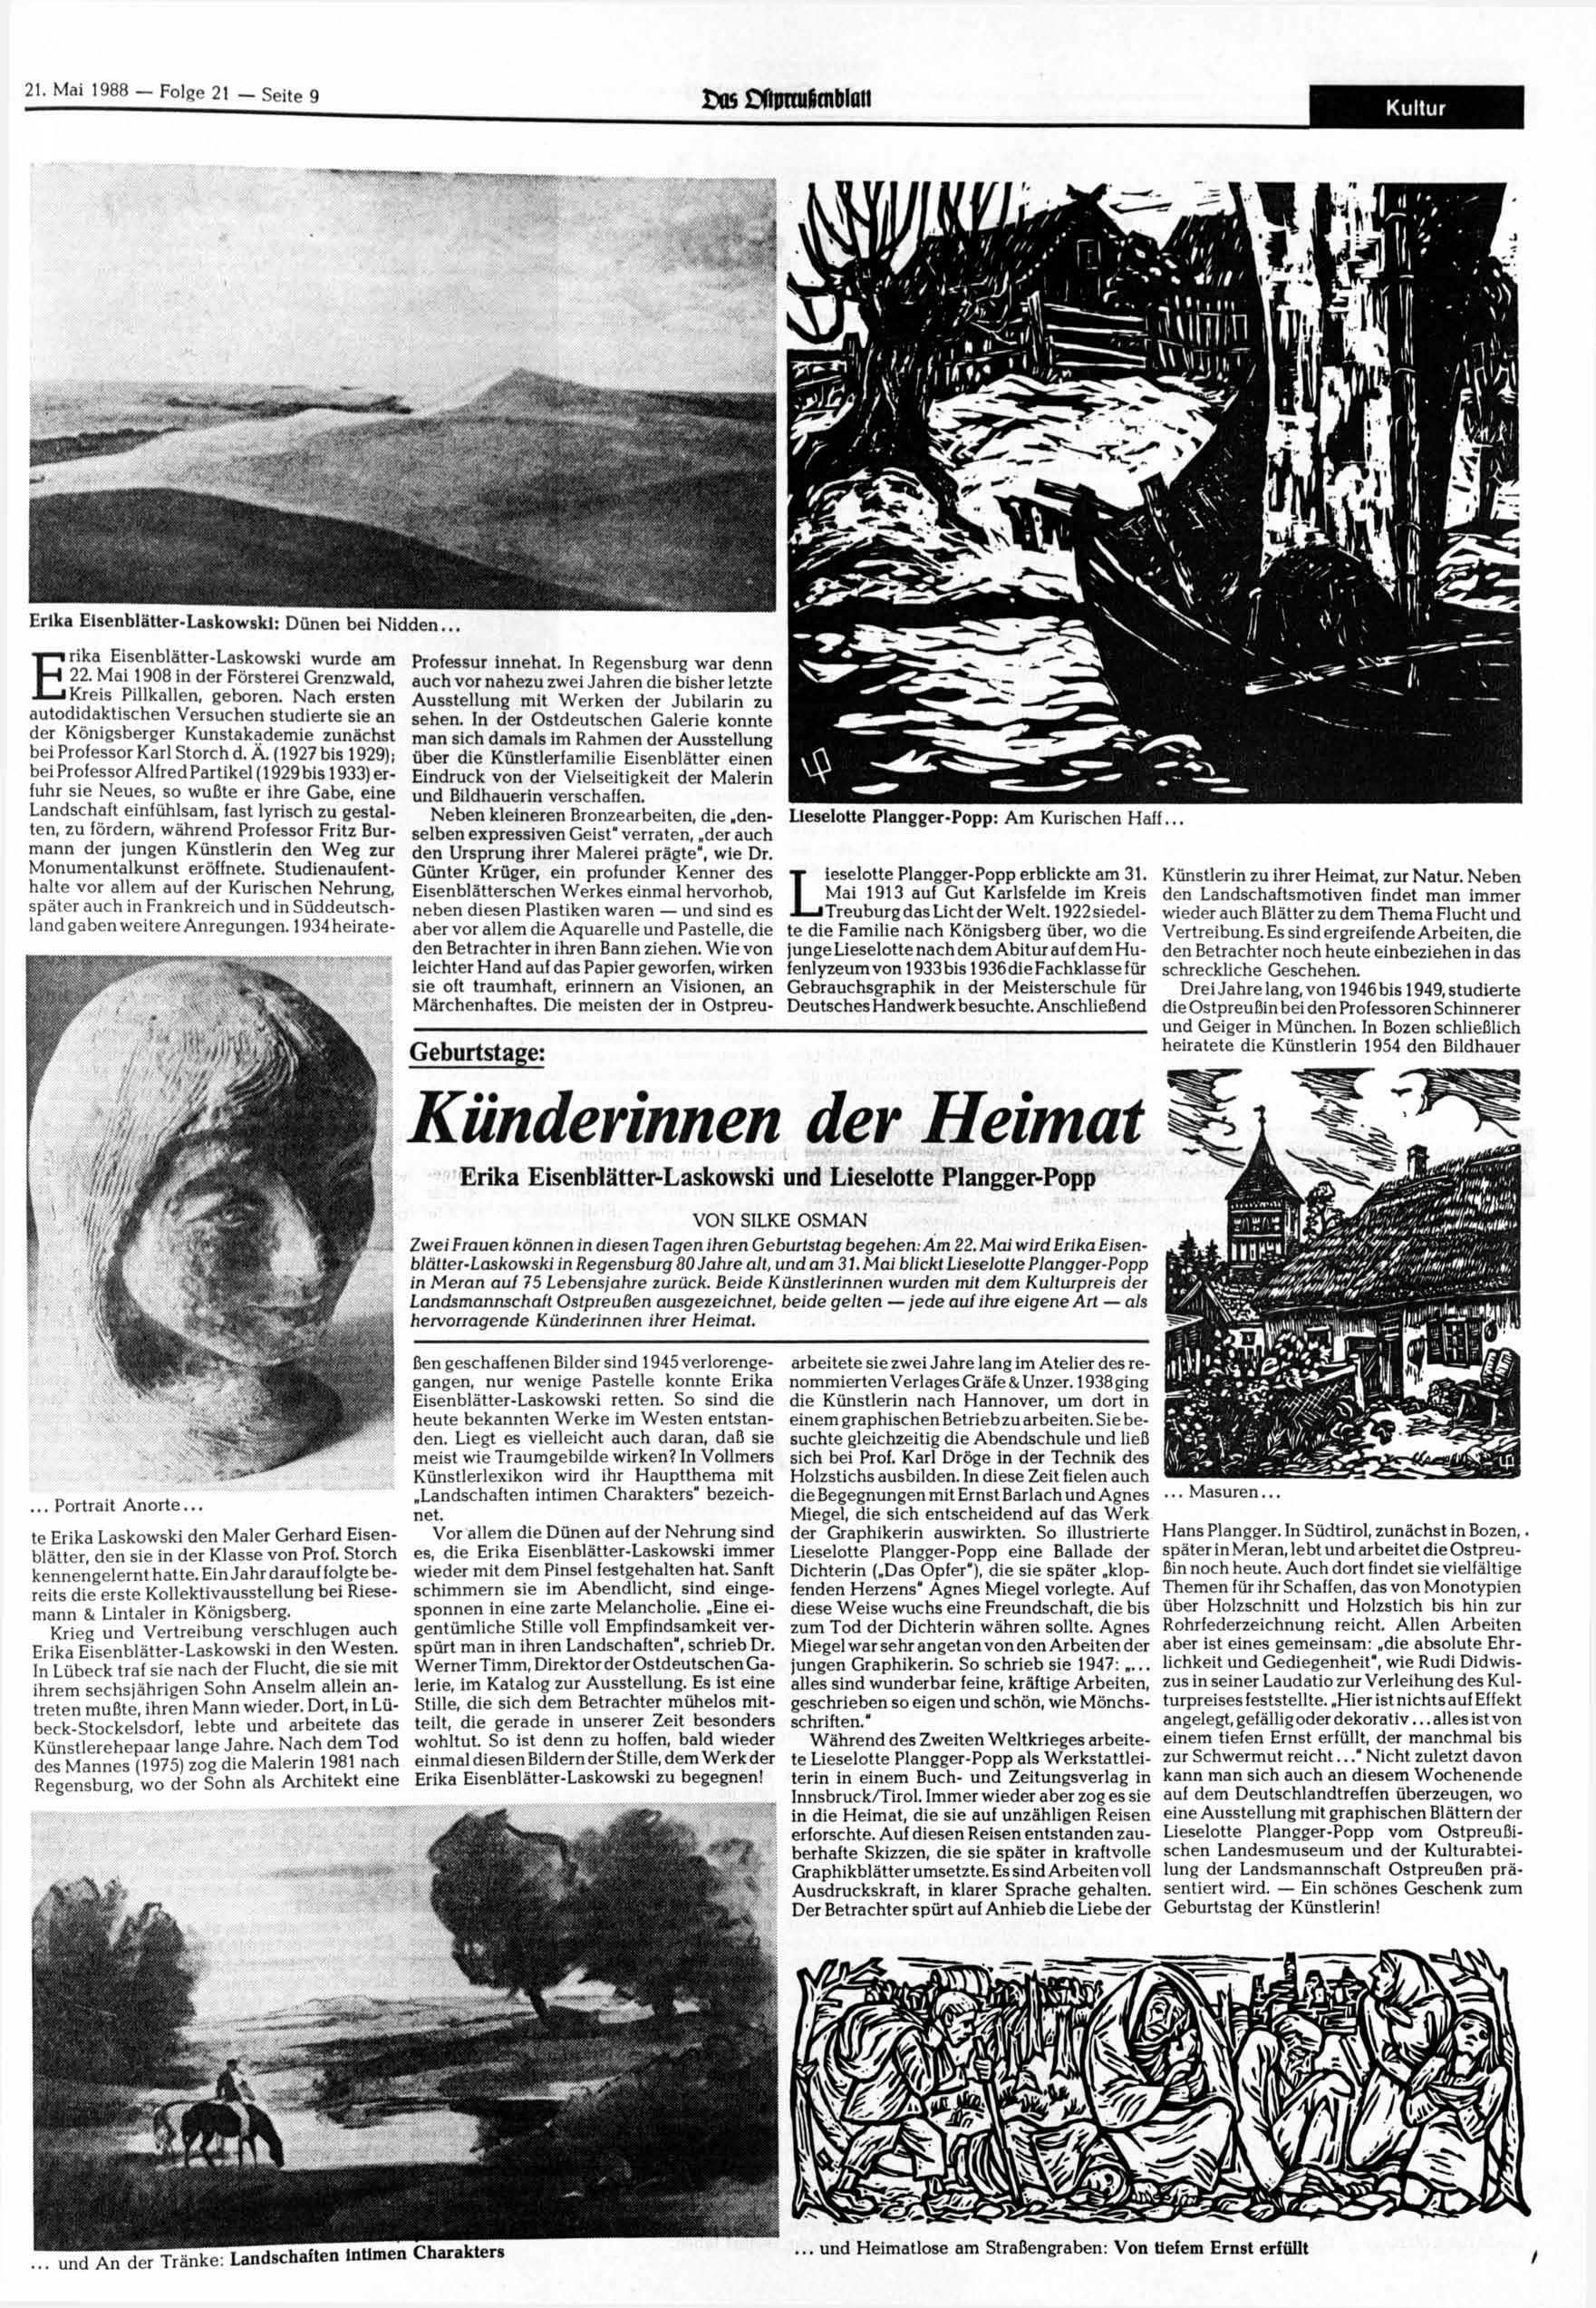 21. Mai 1988 Folge 21 Seite 9 os Wpraifimblatt Kultur Erika Eisenblätter-Laskowski: Dünen bei Nidden... Erika Eisenblätter-Laskowski wurde am 22.